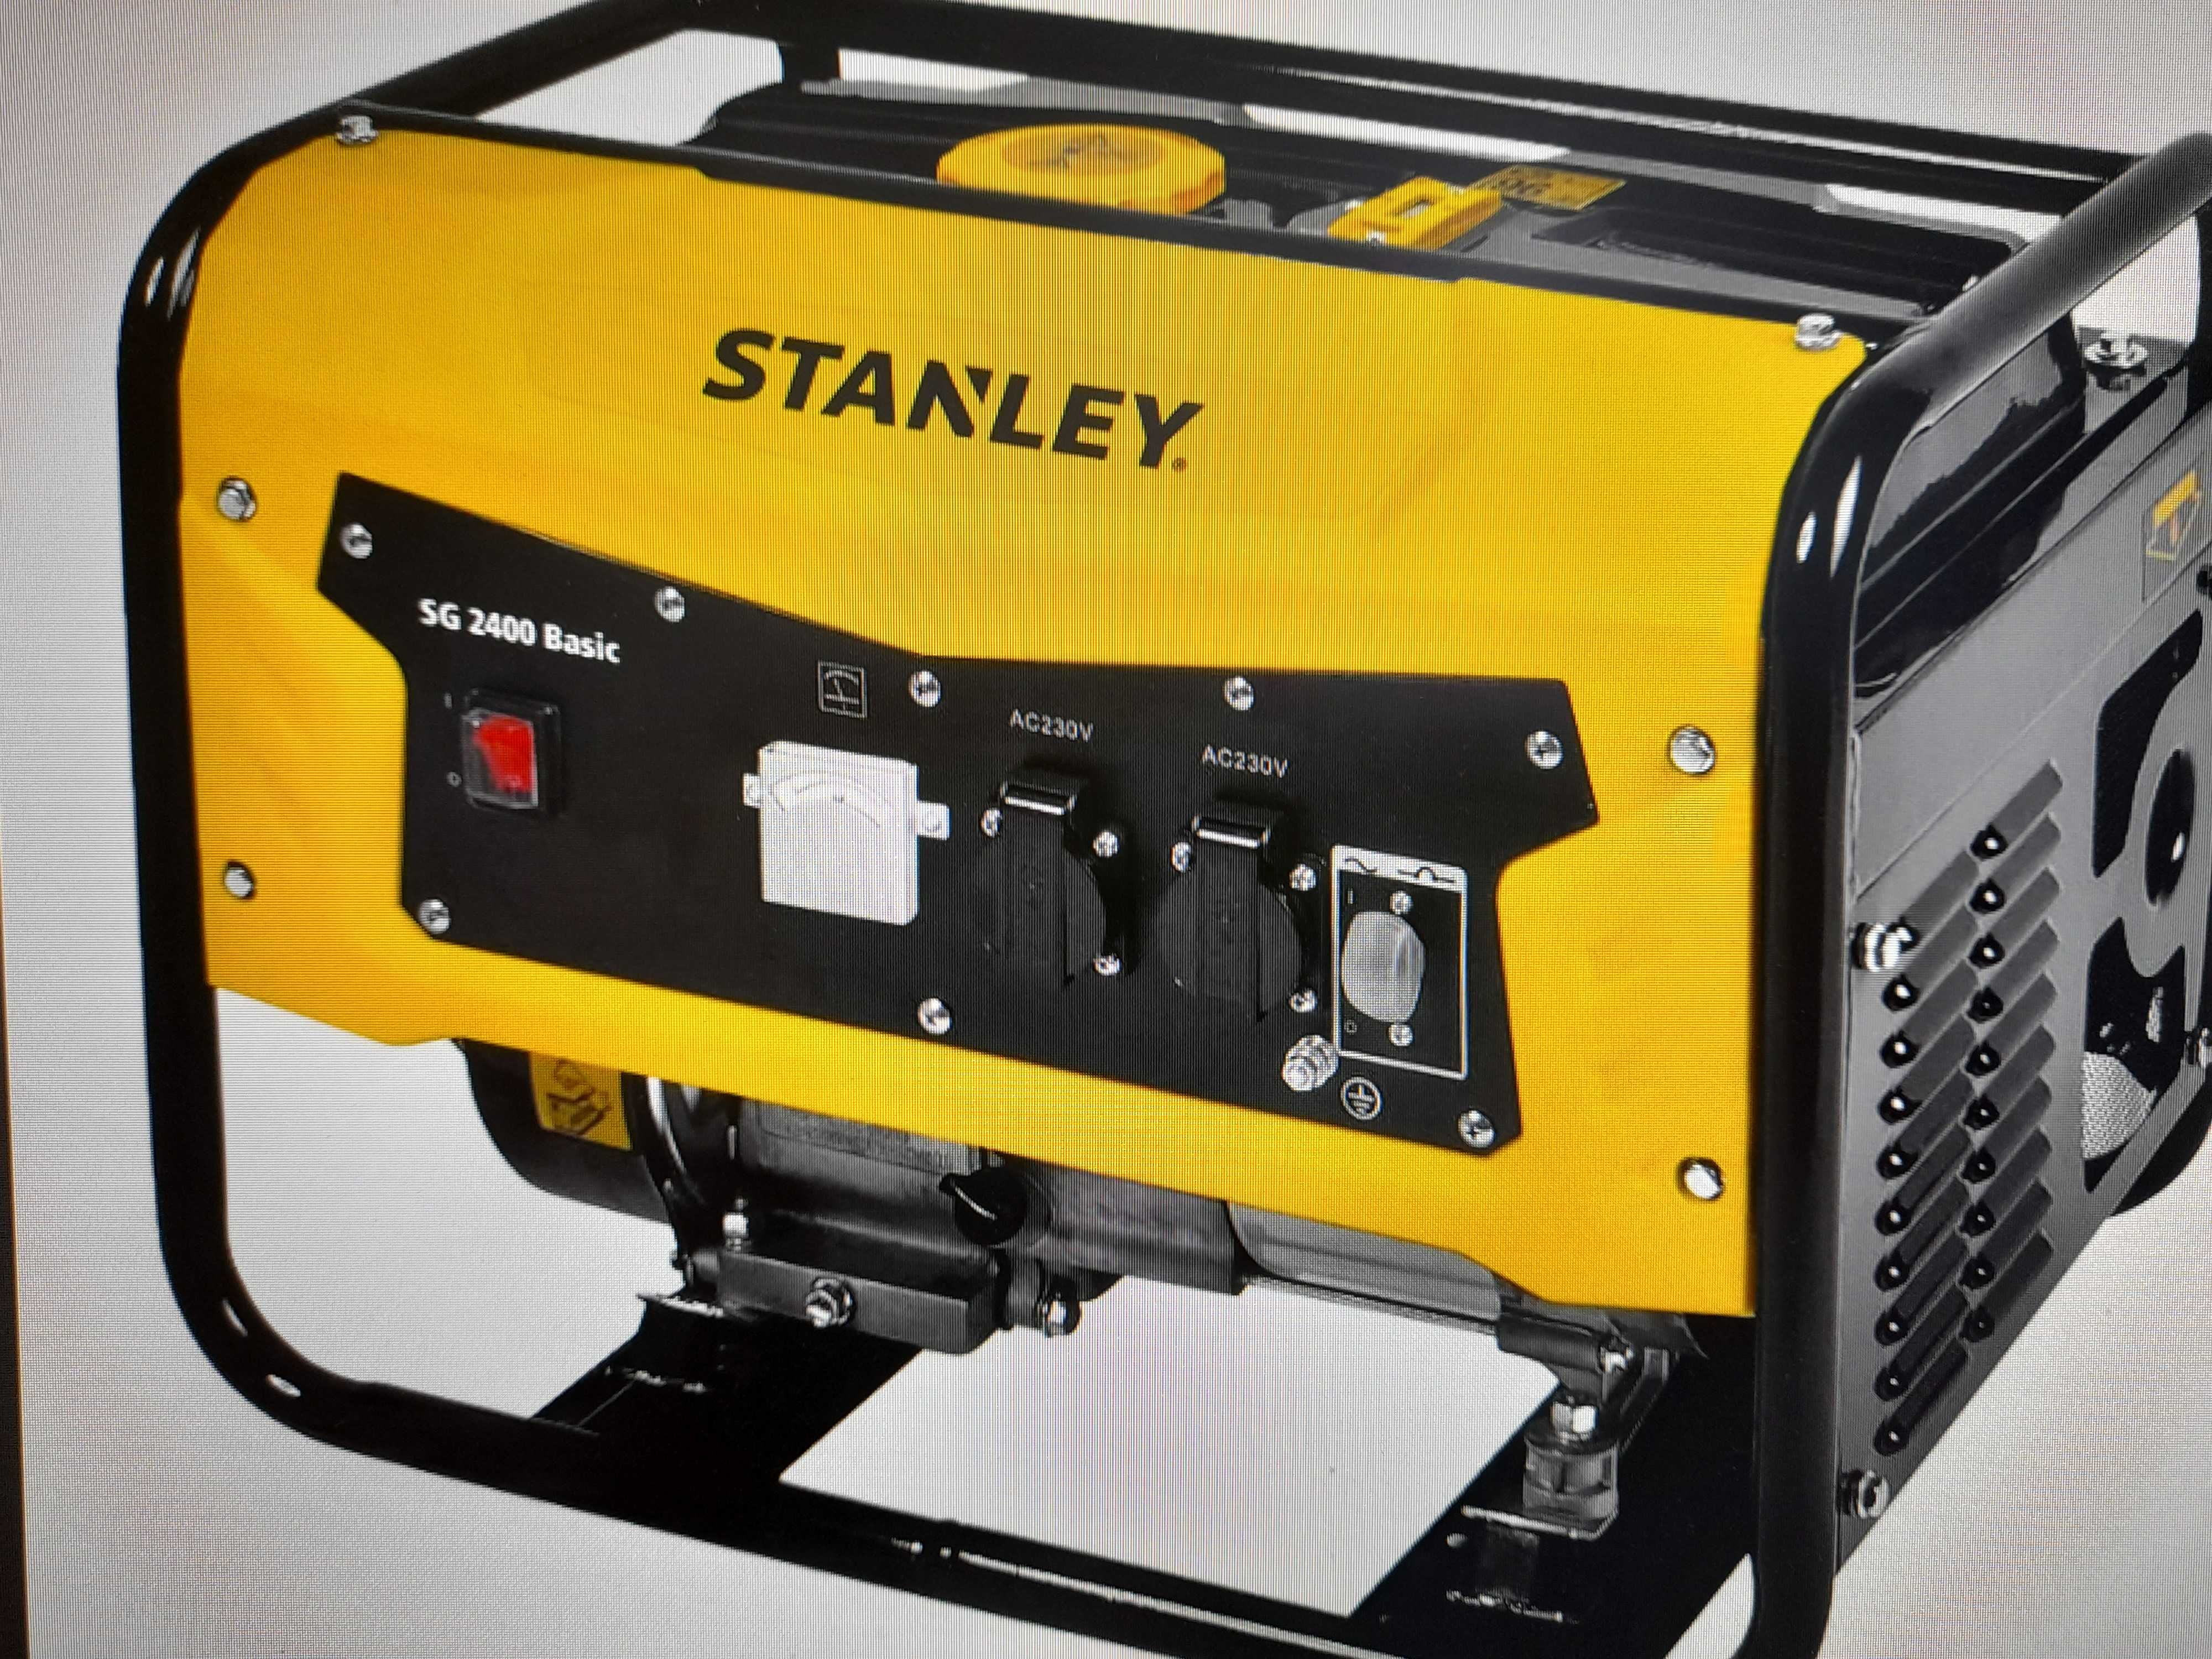 STANLEY Agregat prądotwórczy SG 2400 Basic Na gwarancji !!!